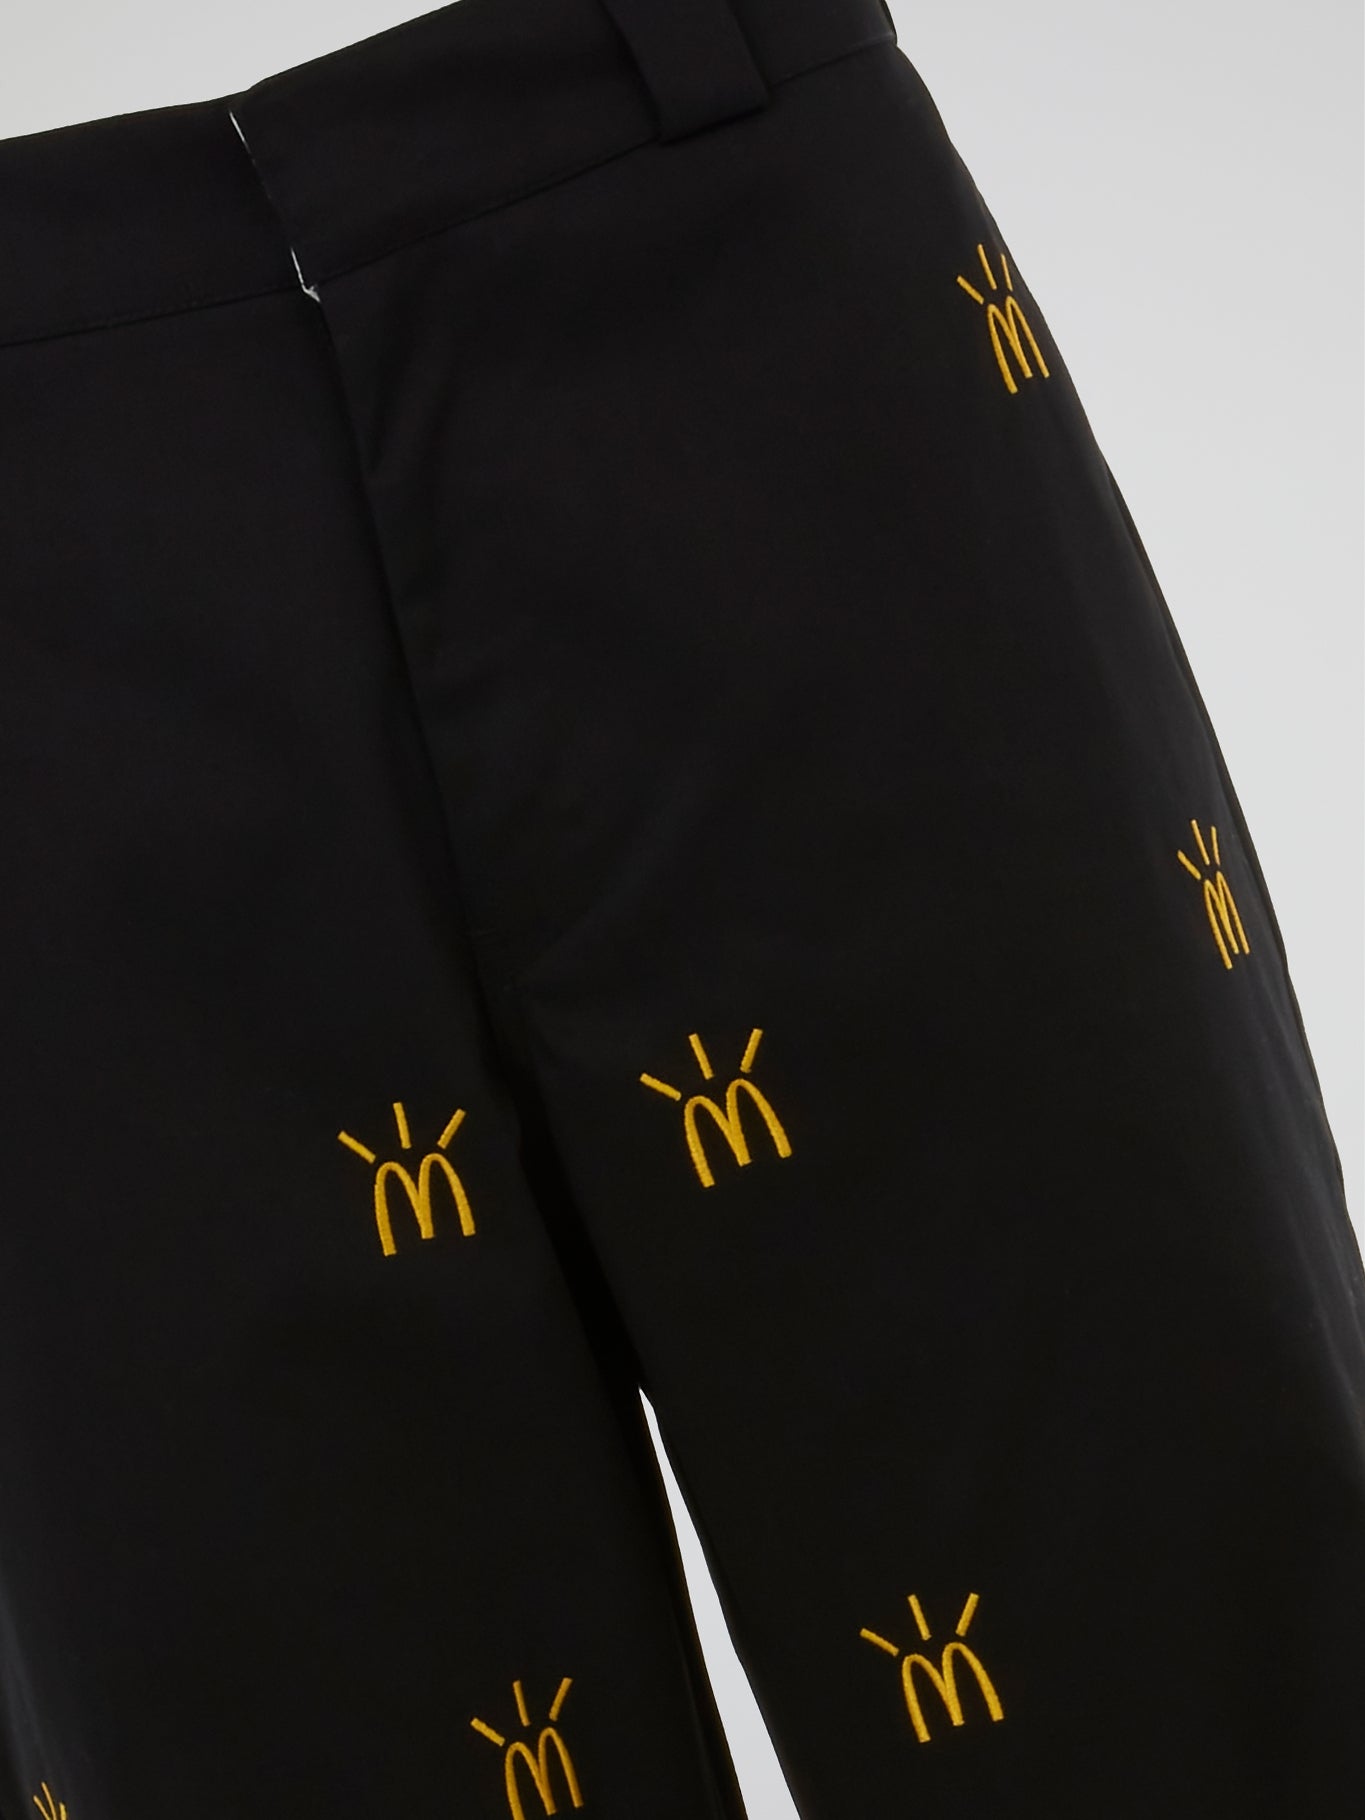 McDonalds Employee Uniforms Got a Designer Upgrade  Allure